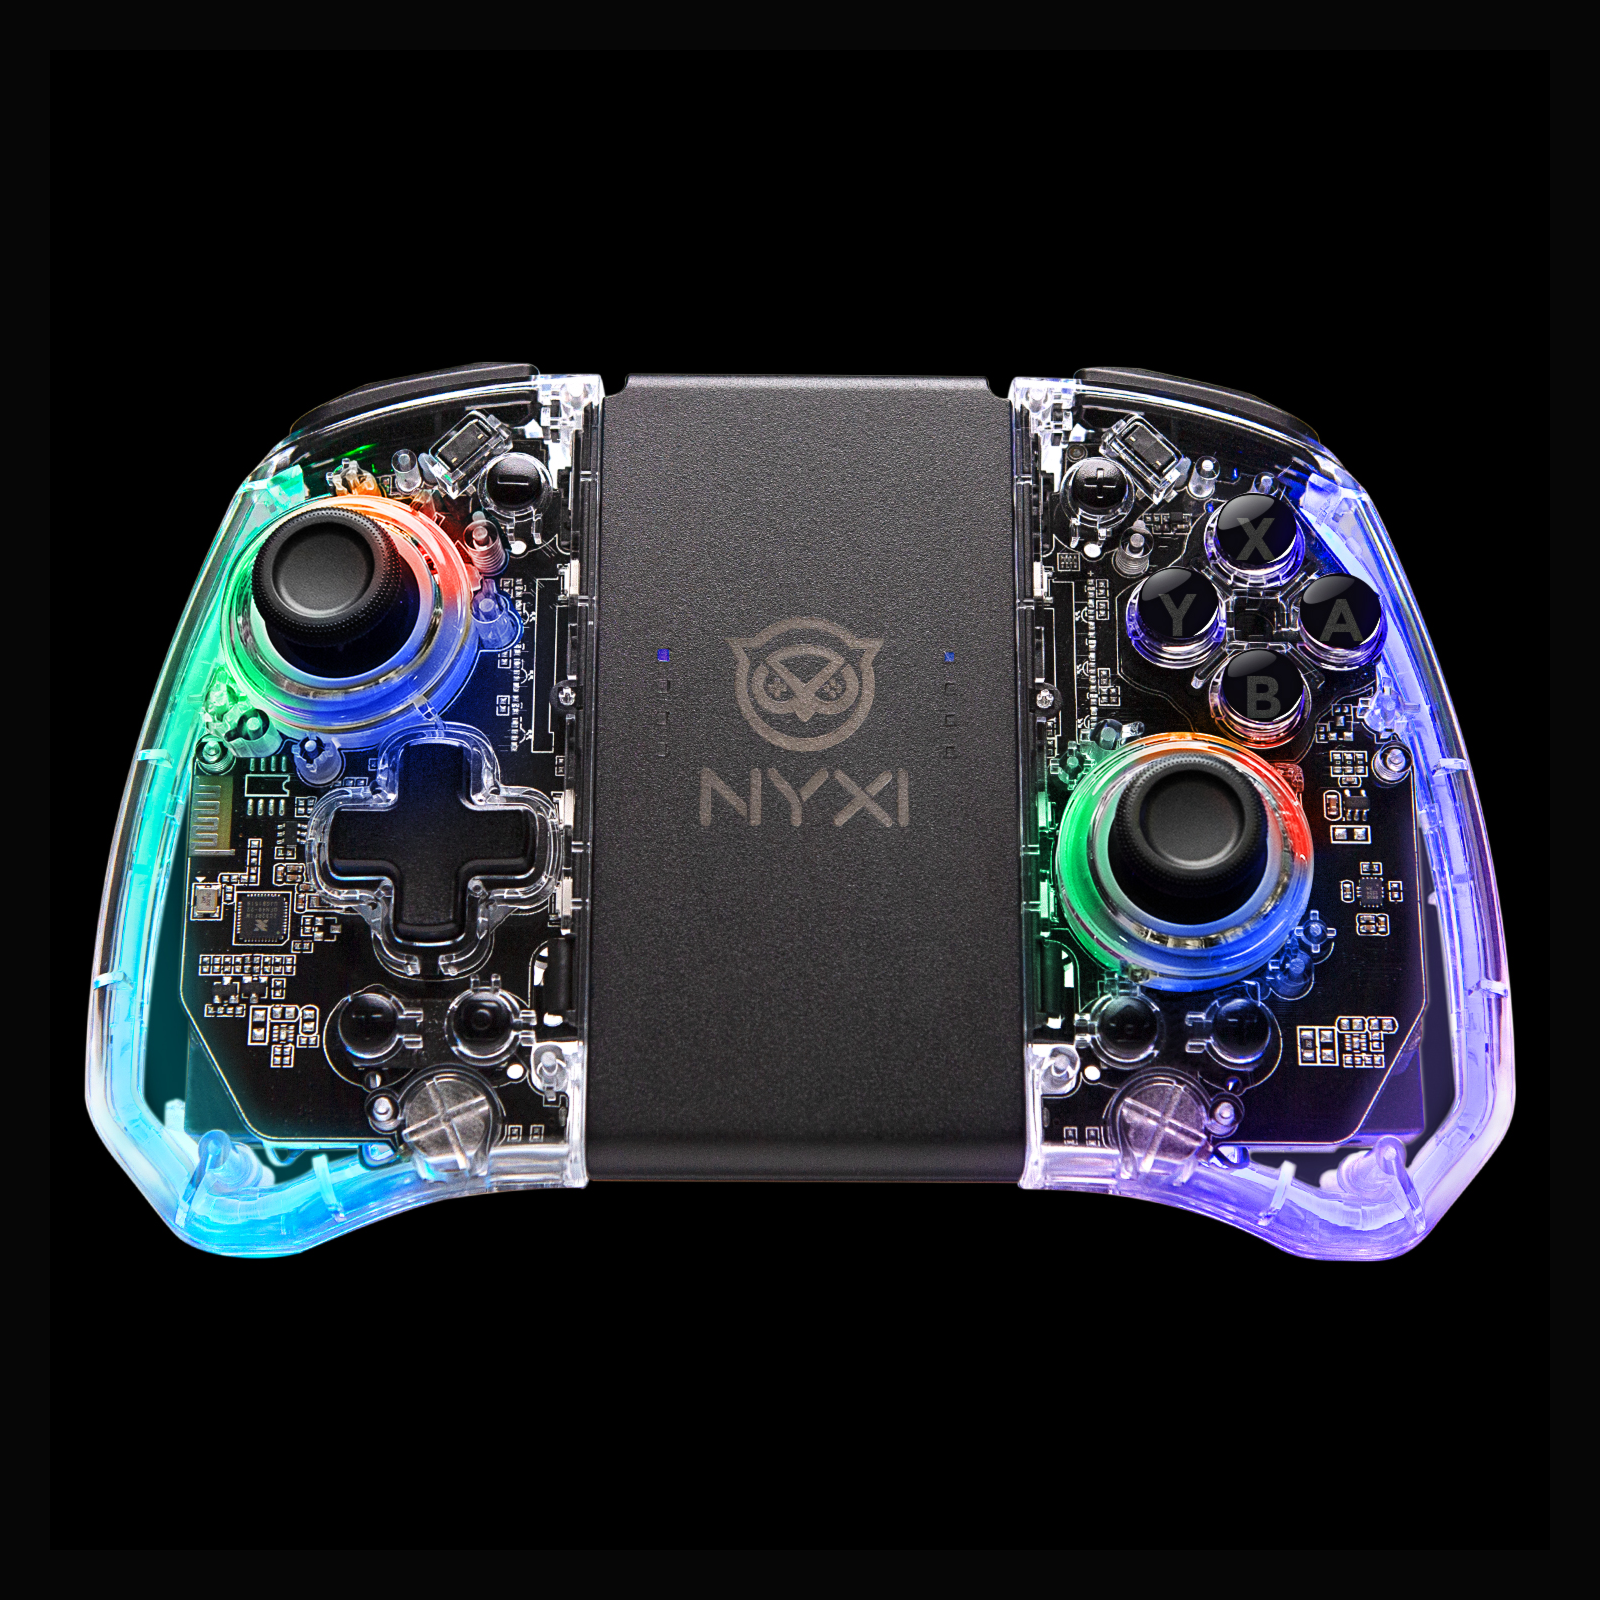 Review – NYXI Wireless Joy-pad — Hive